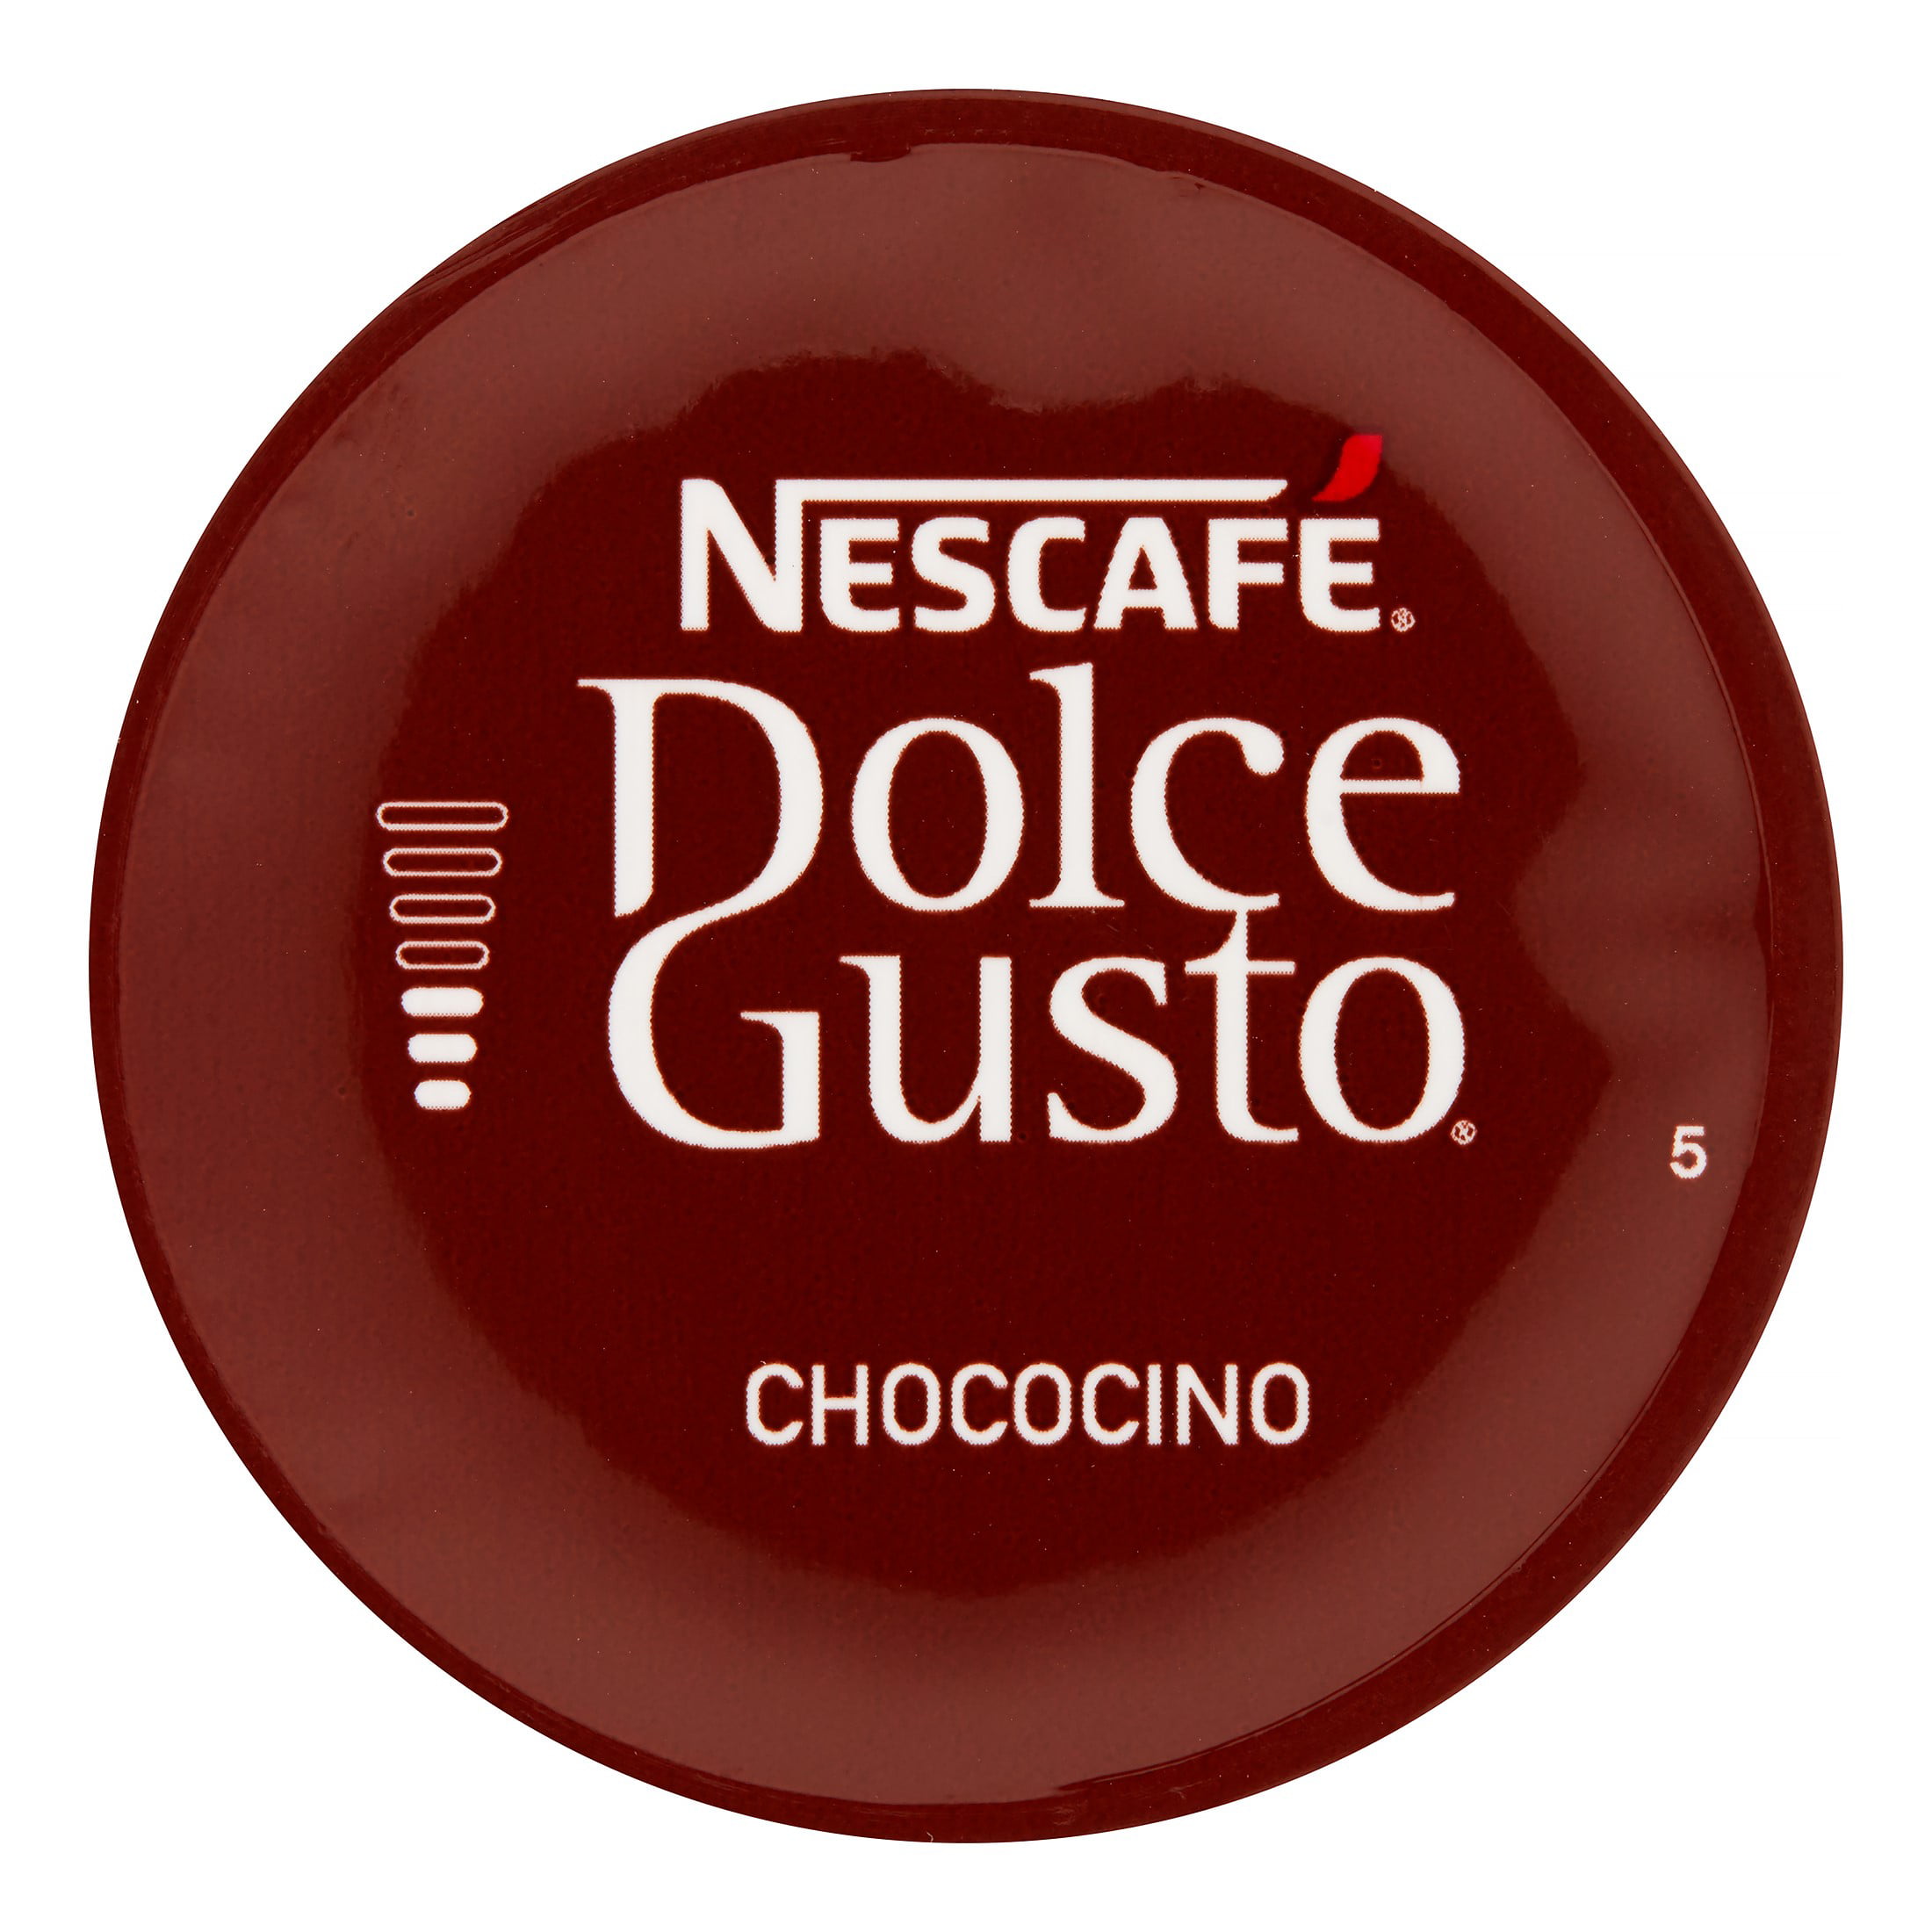 Nescafe Dolce Gusto Chococino Capsules, 16 Count